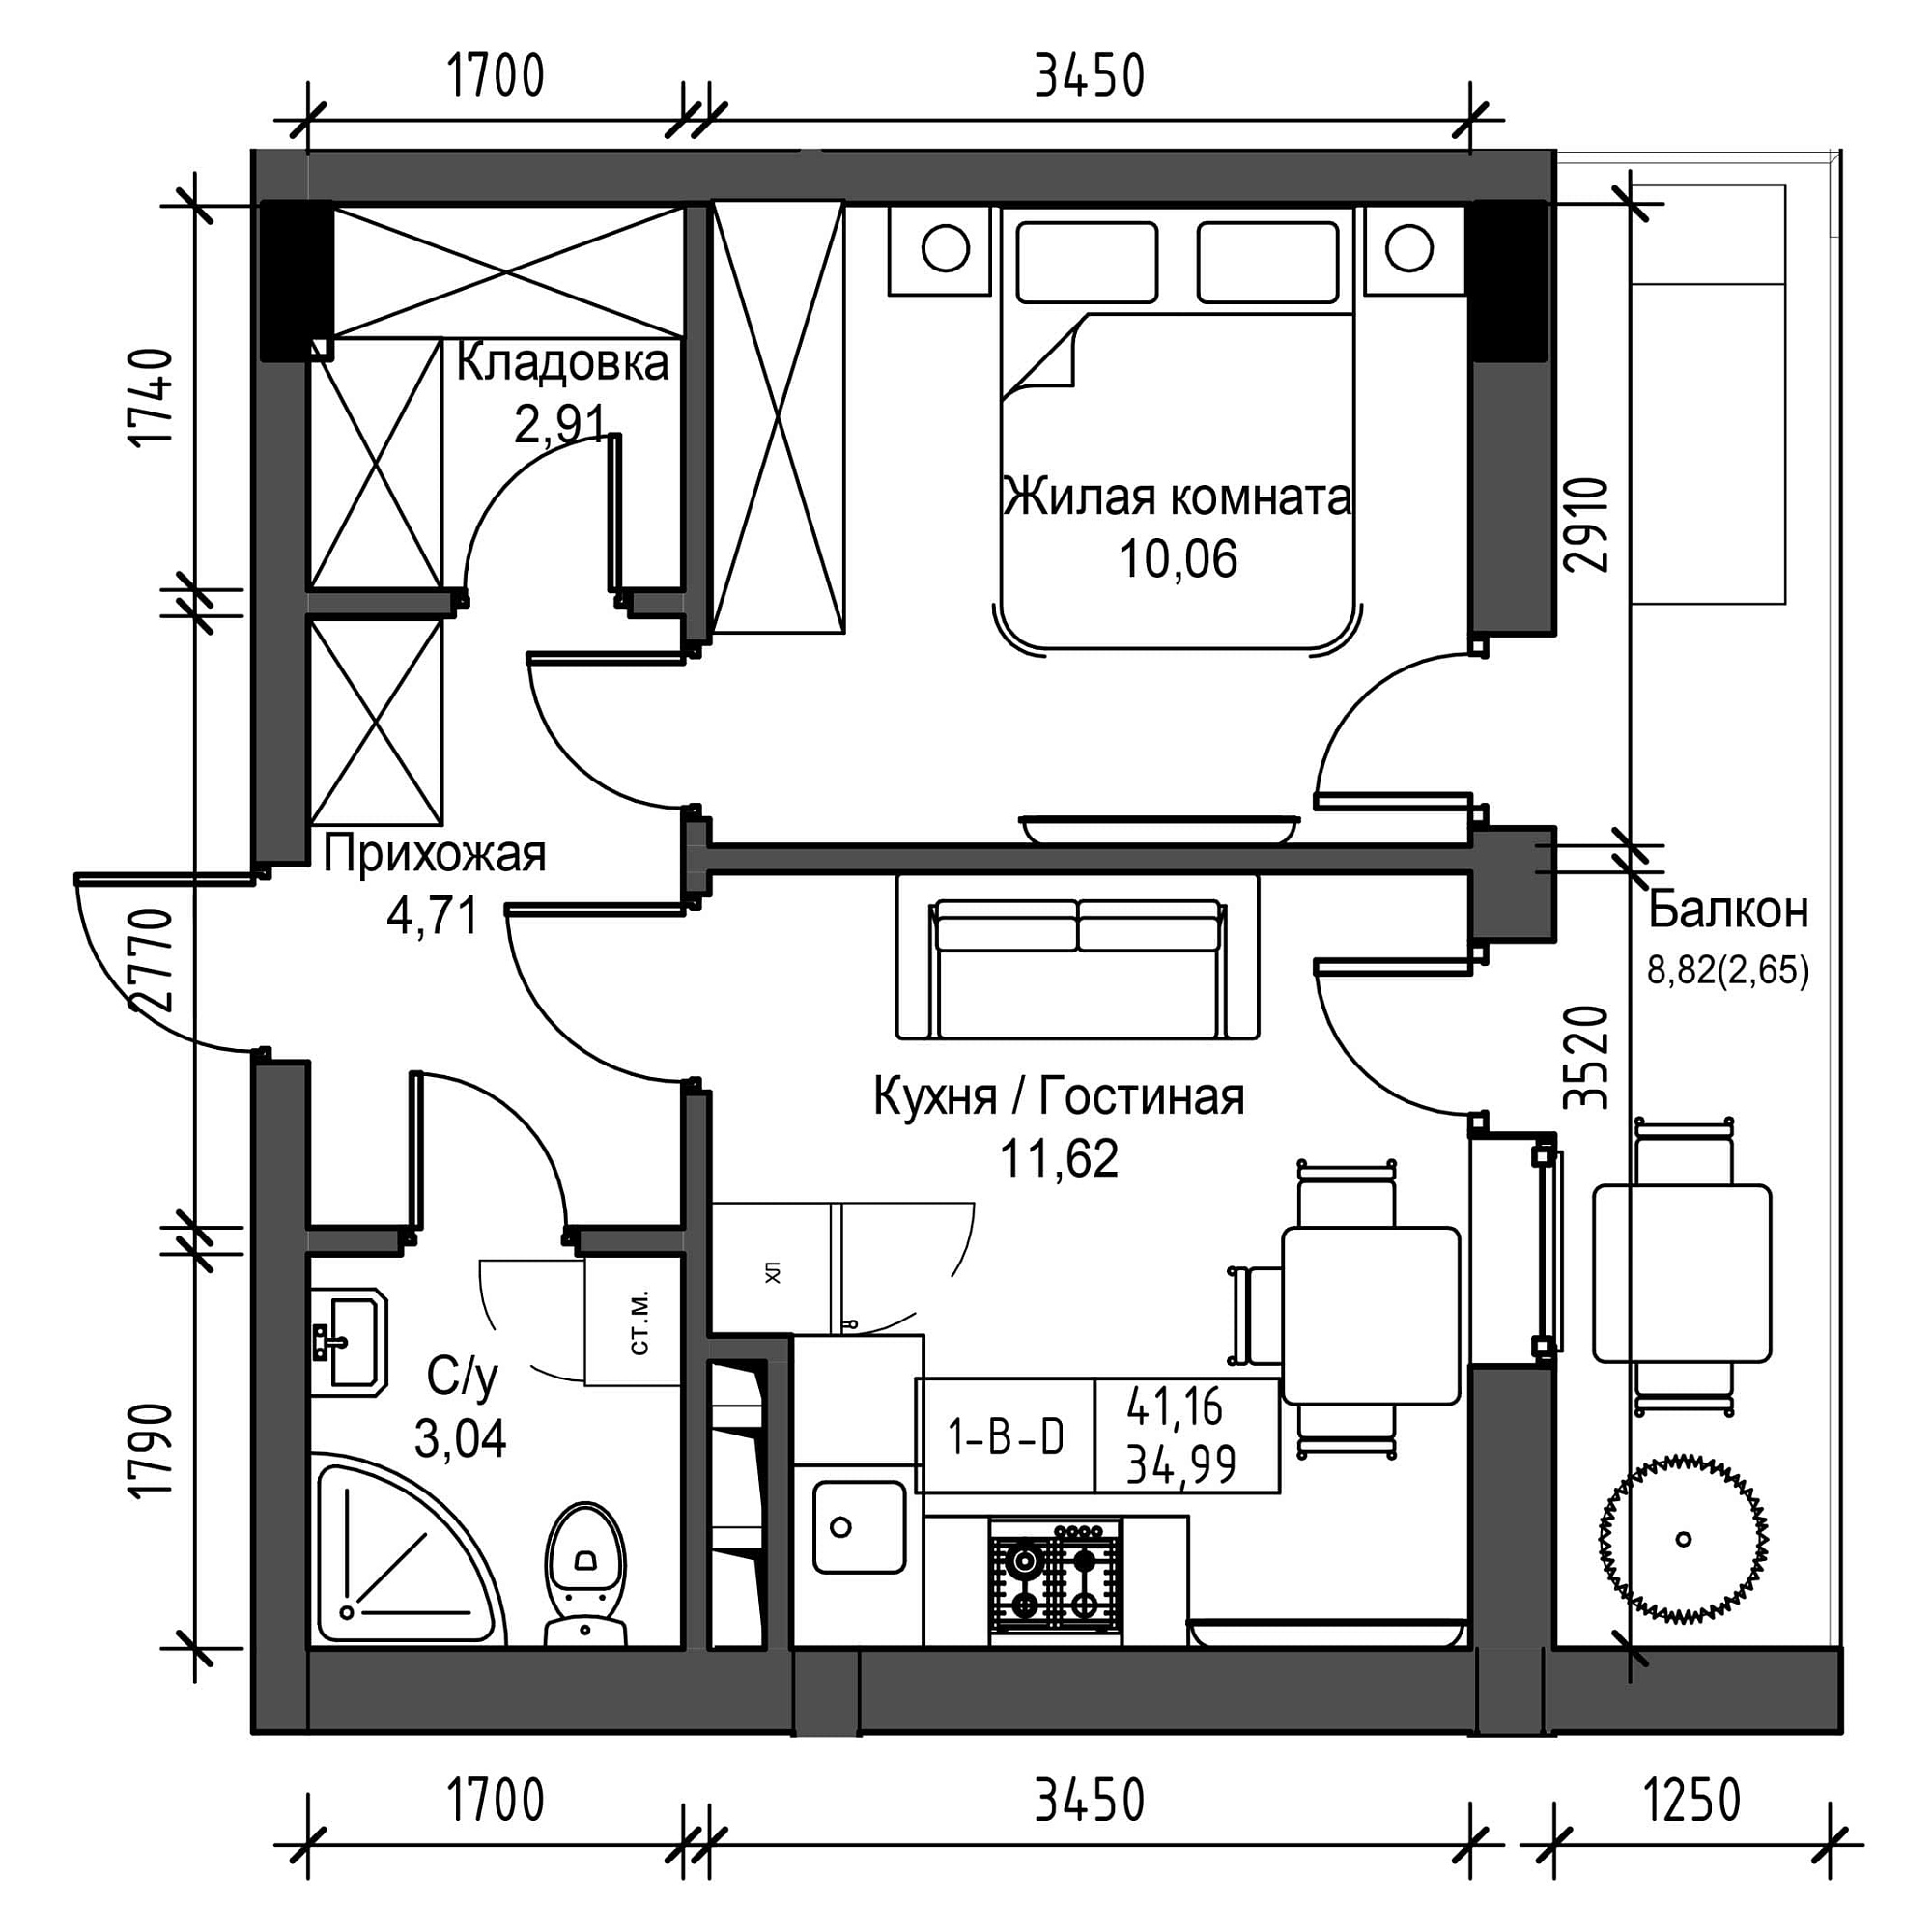 Планування 1-к квартира площею 34.99м2, UM-001-07/0024.